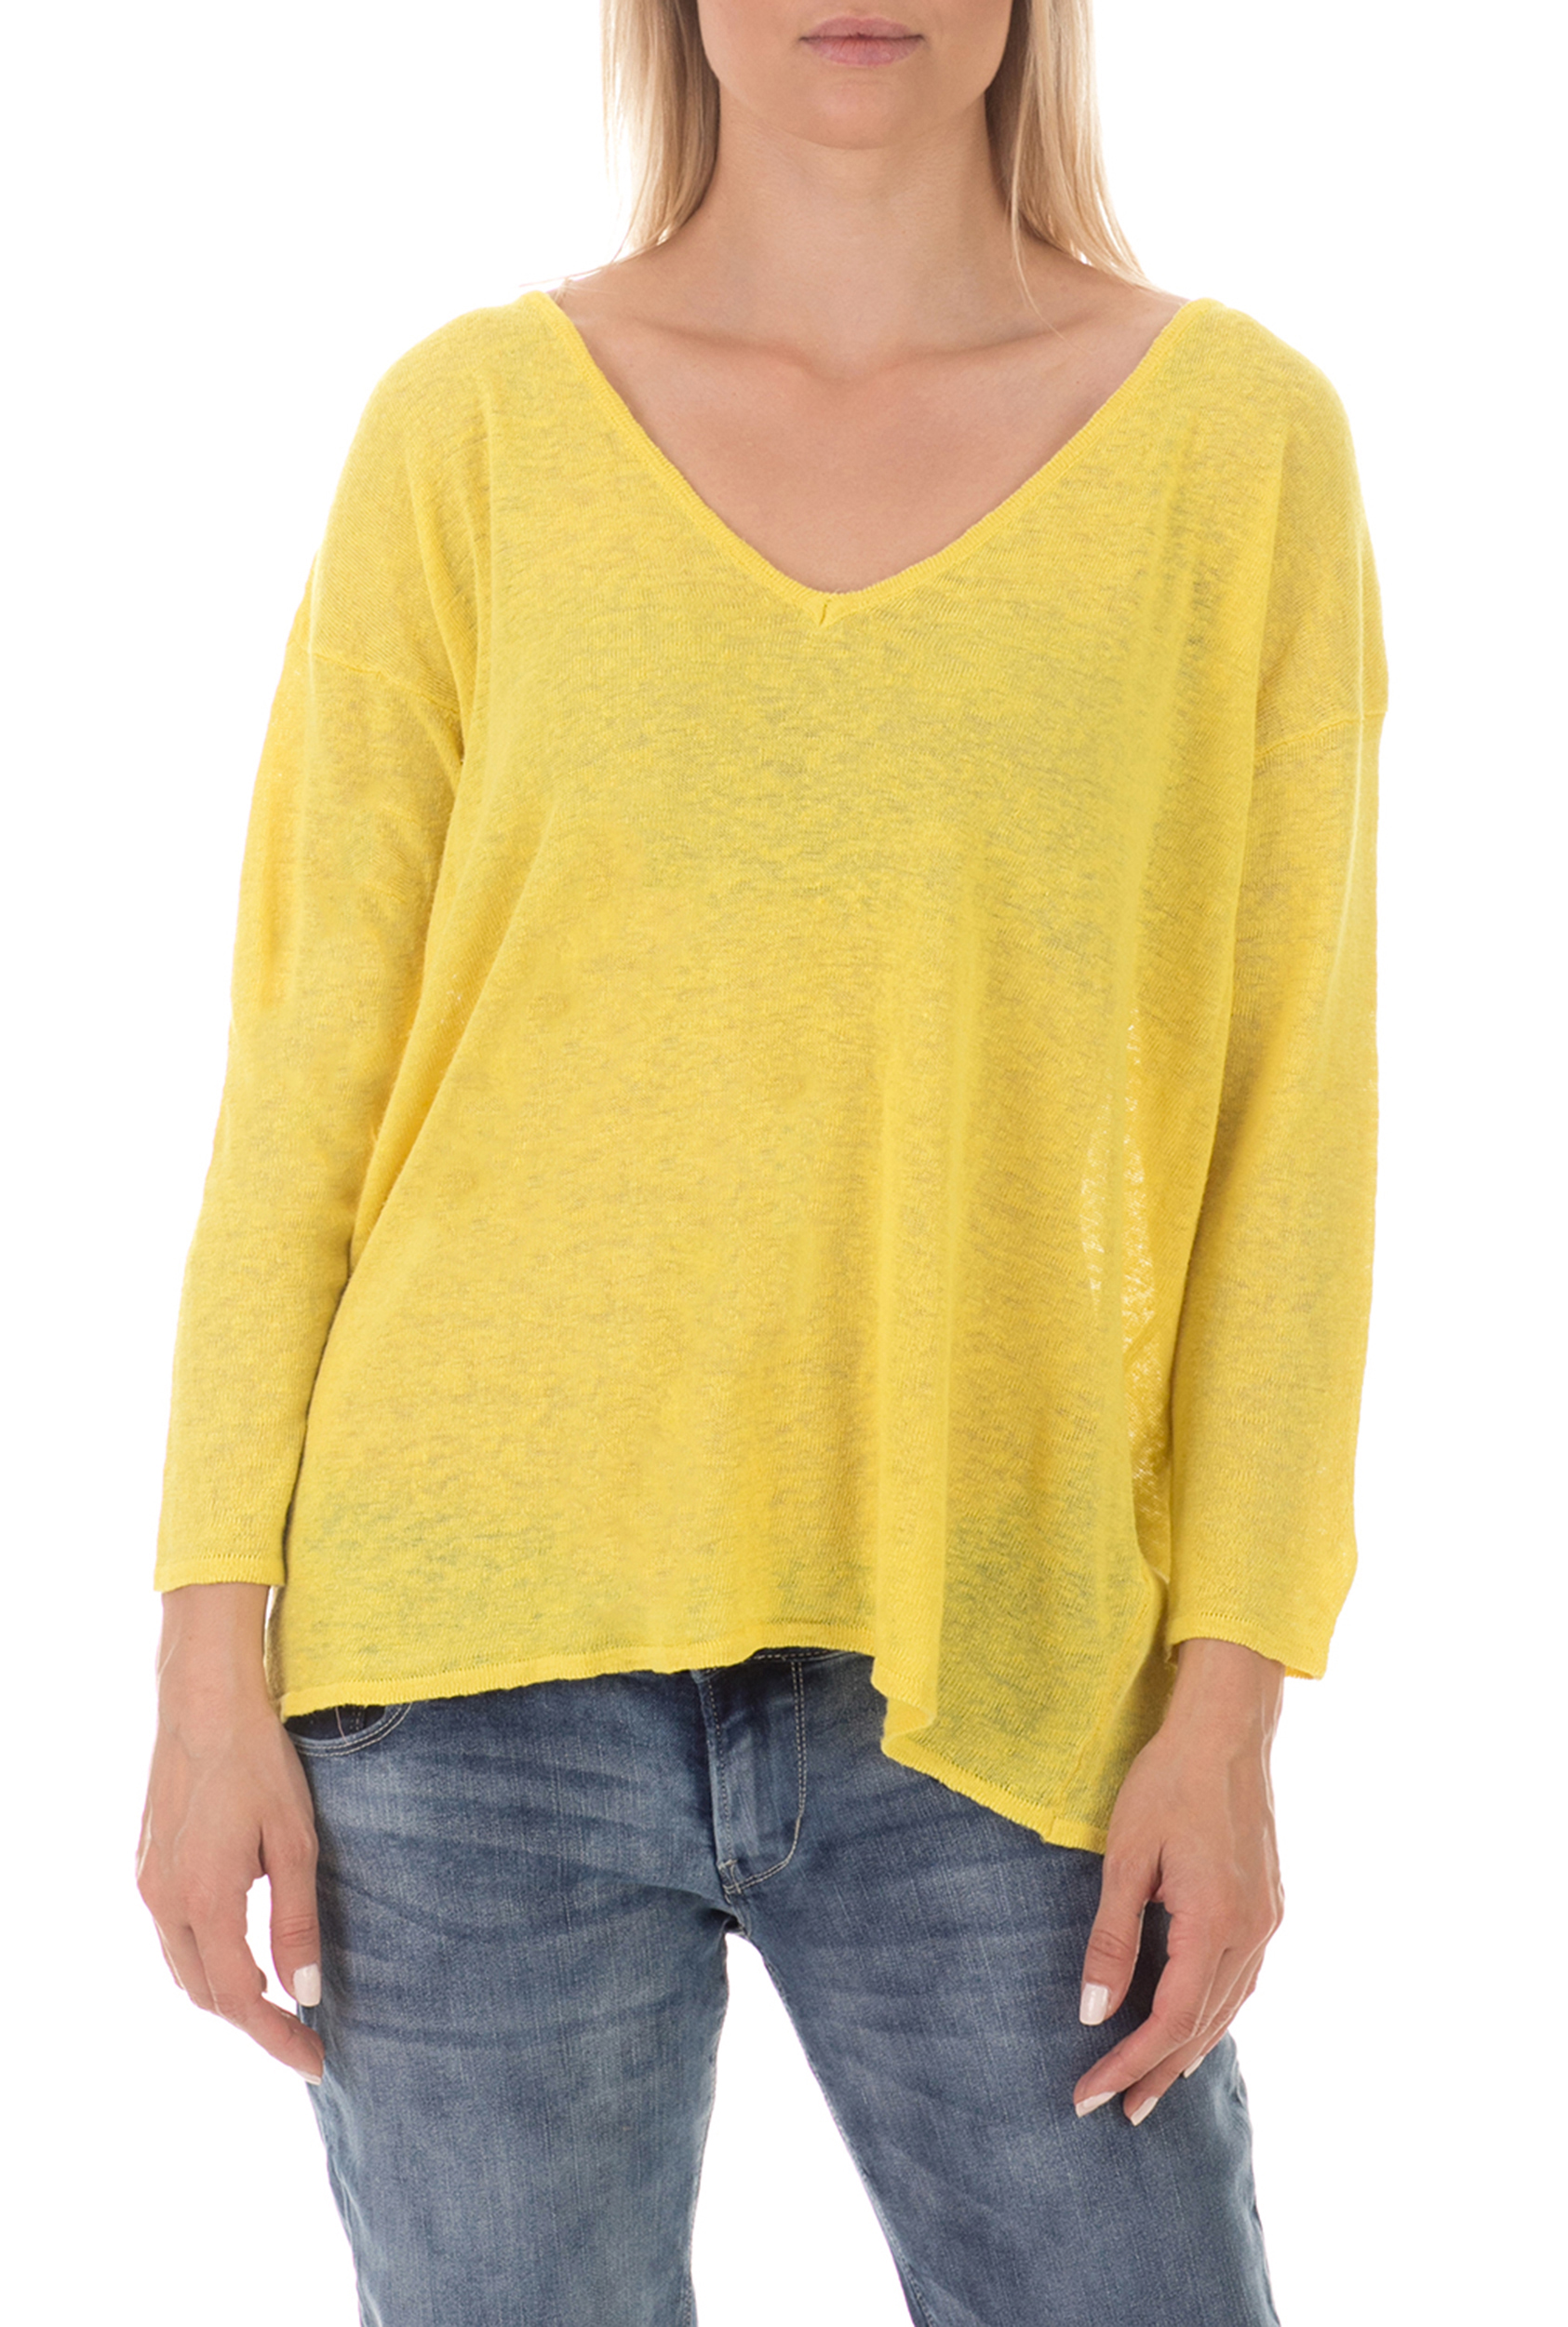 AMERICAN VINTAGE - Γυναικεία πλεκτή μπλούζα AMERICAN VINTAGE κίτρινη Γυναικεία/Ρούχα/Μπλούζες/Μακρυμάνικες